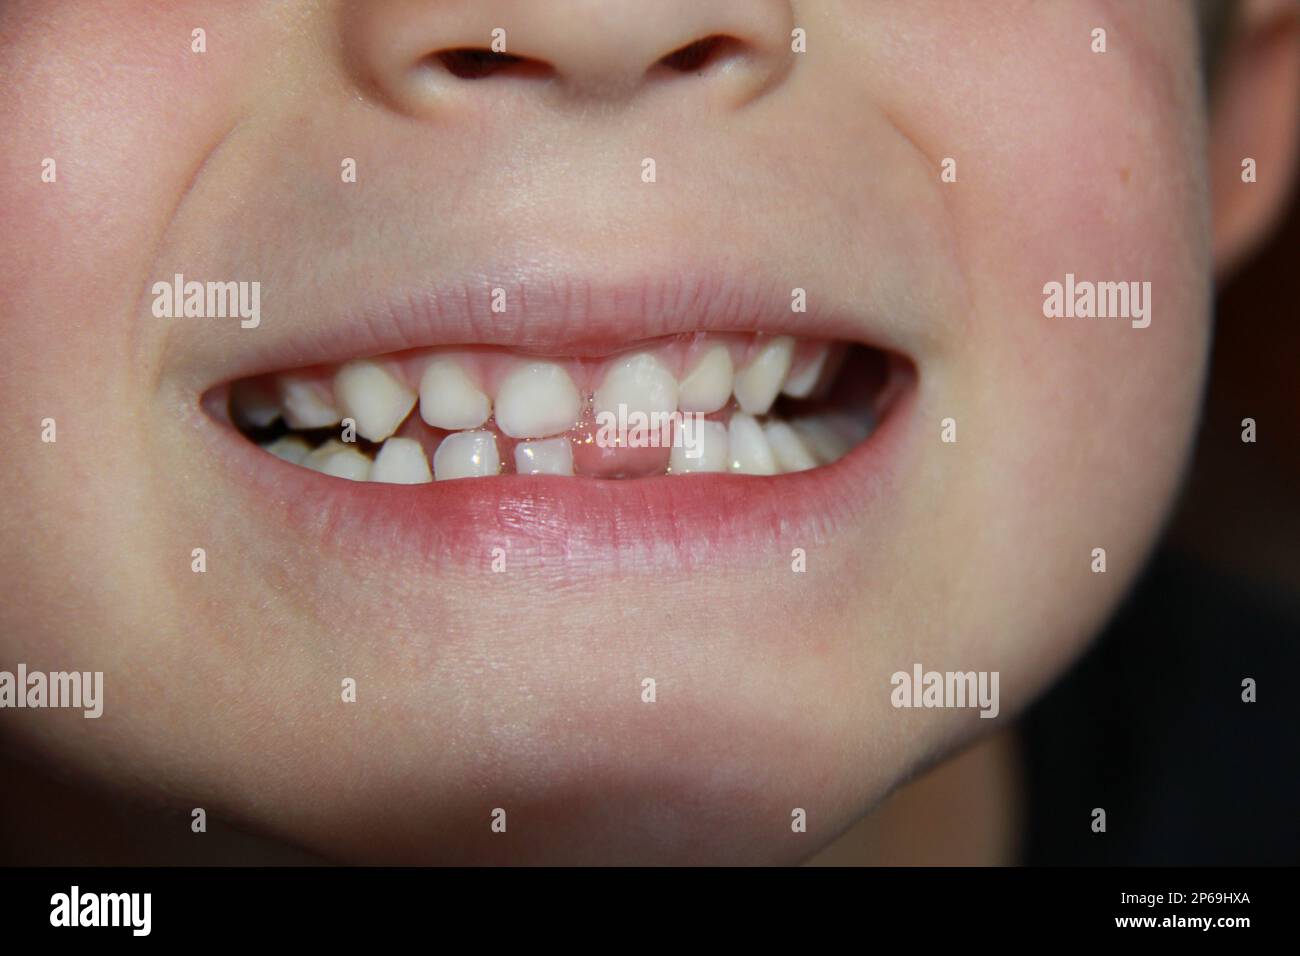 Baby-Zahn-Verlust Stockfoto